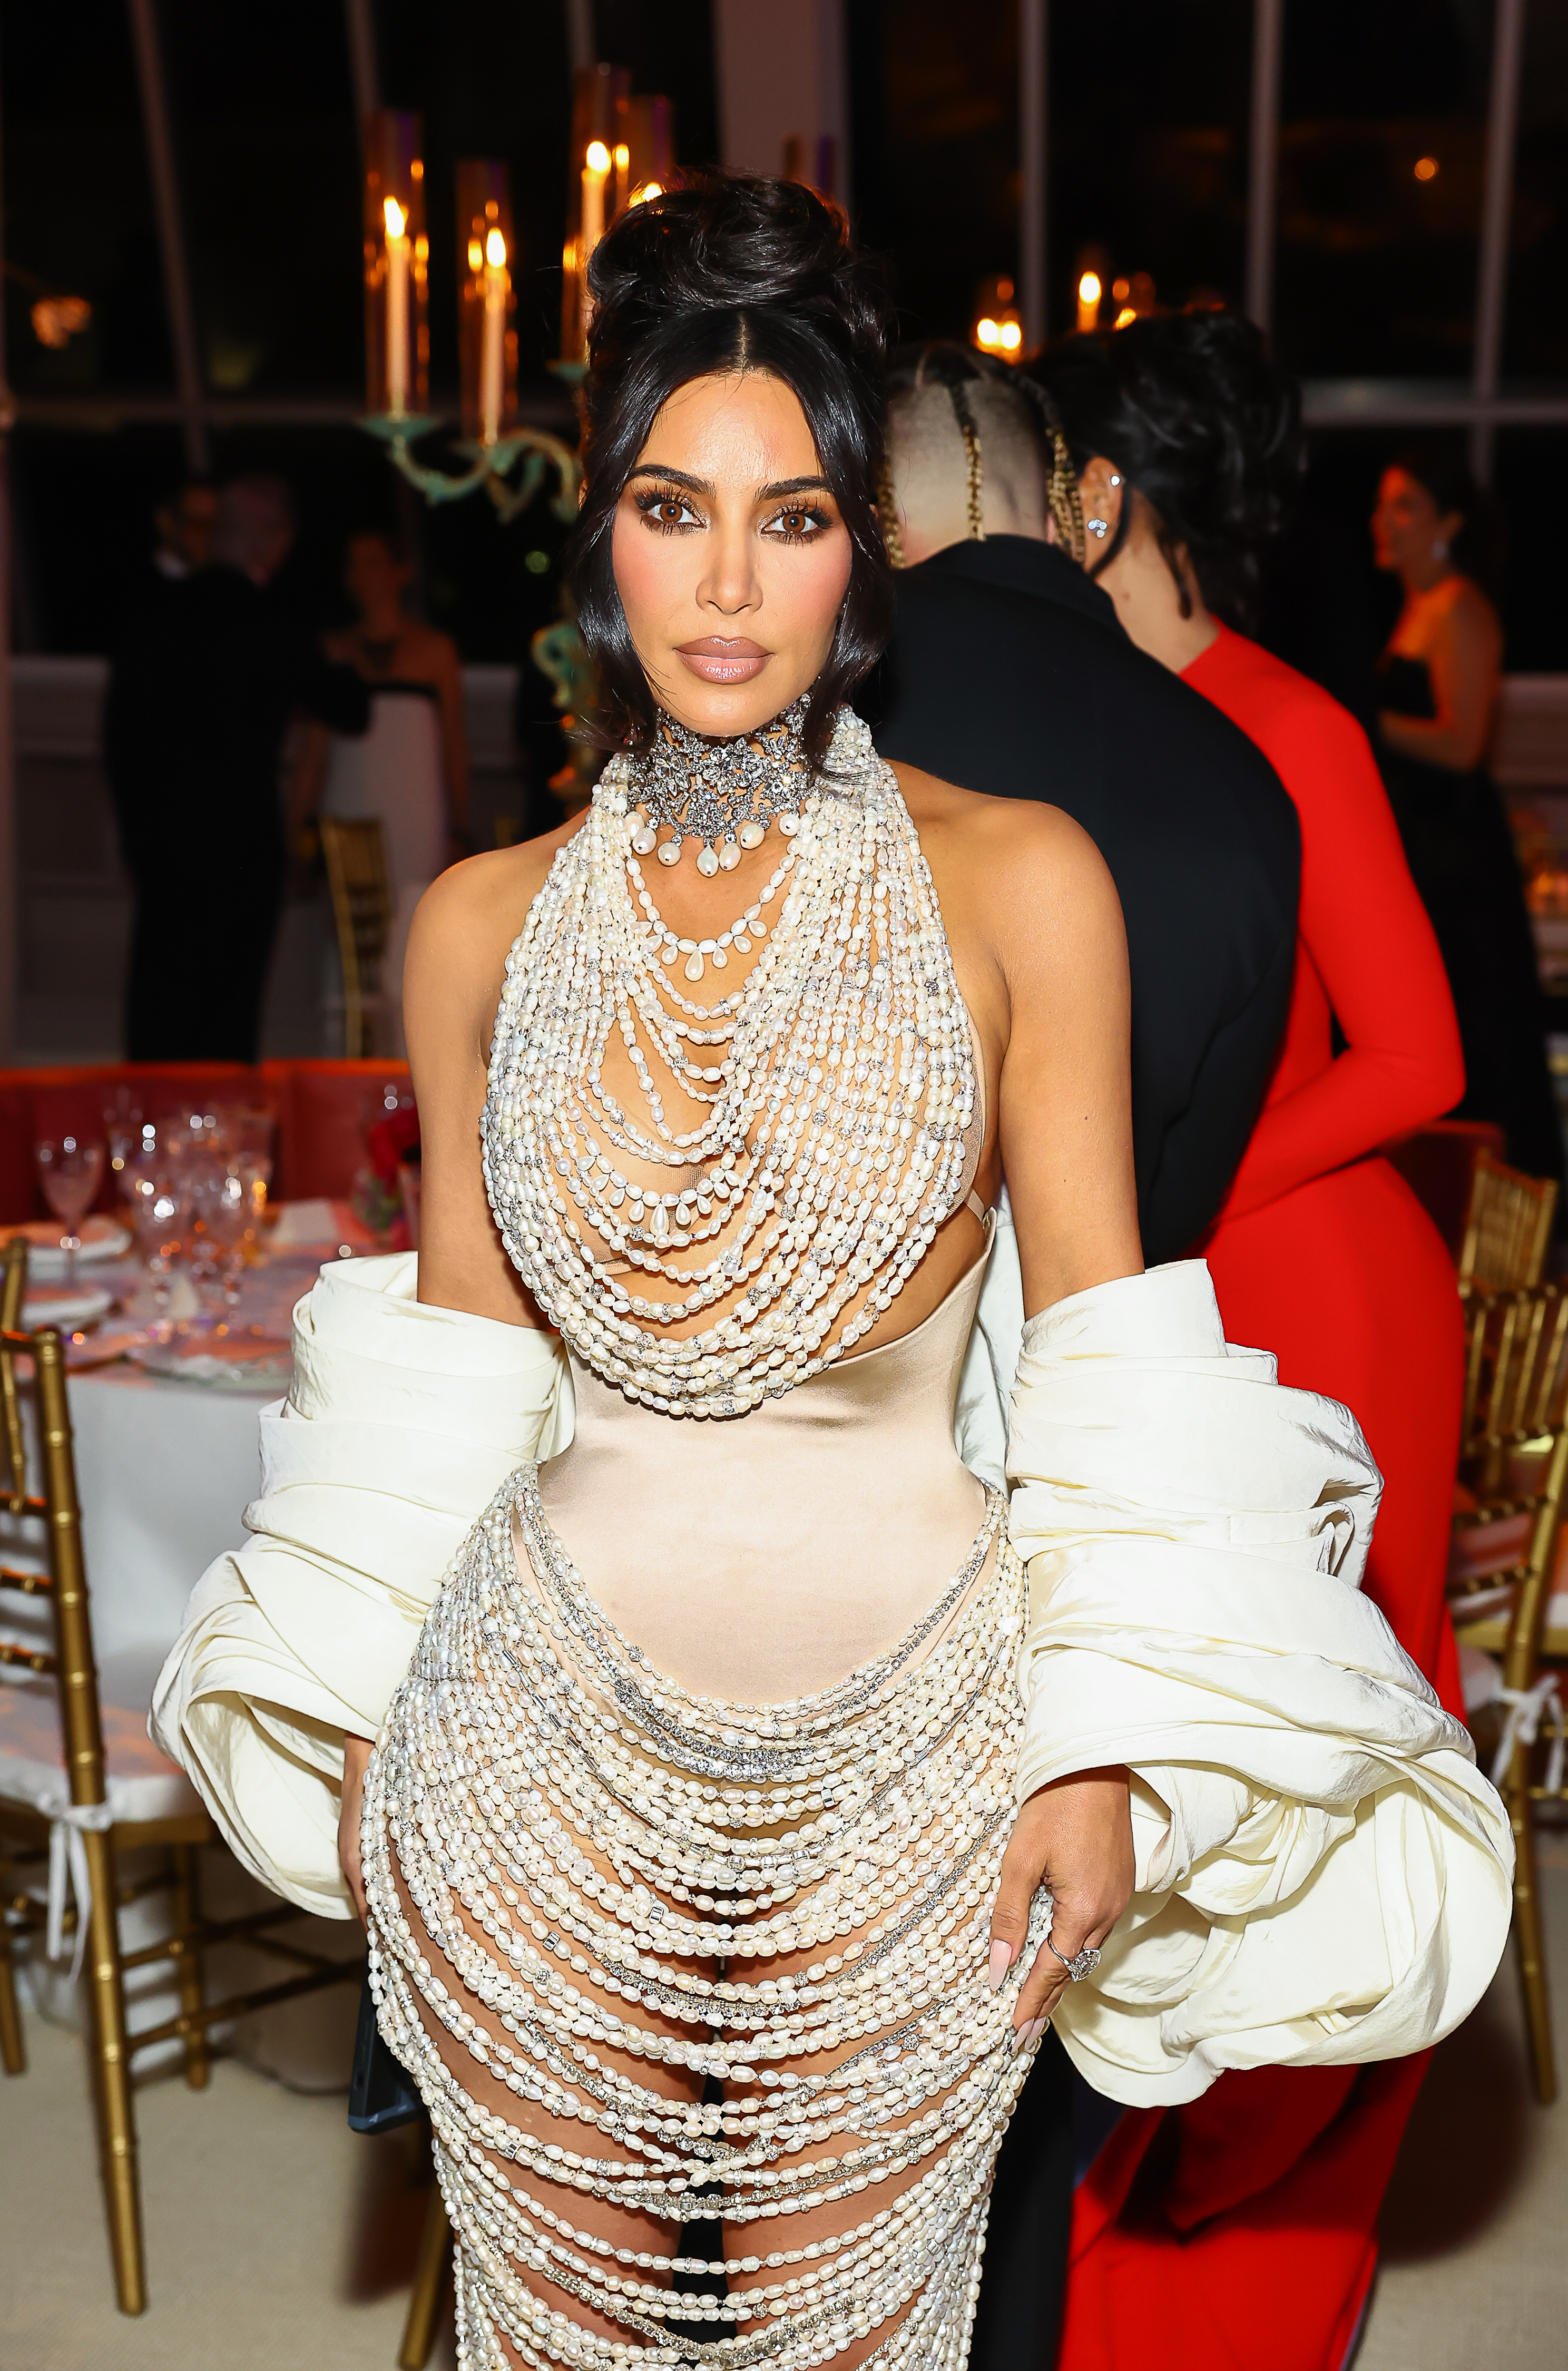 Met Gala 2023: Kim Kardashian shows off daughter North West's set-up